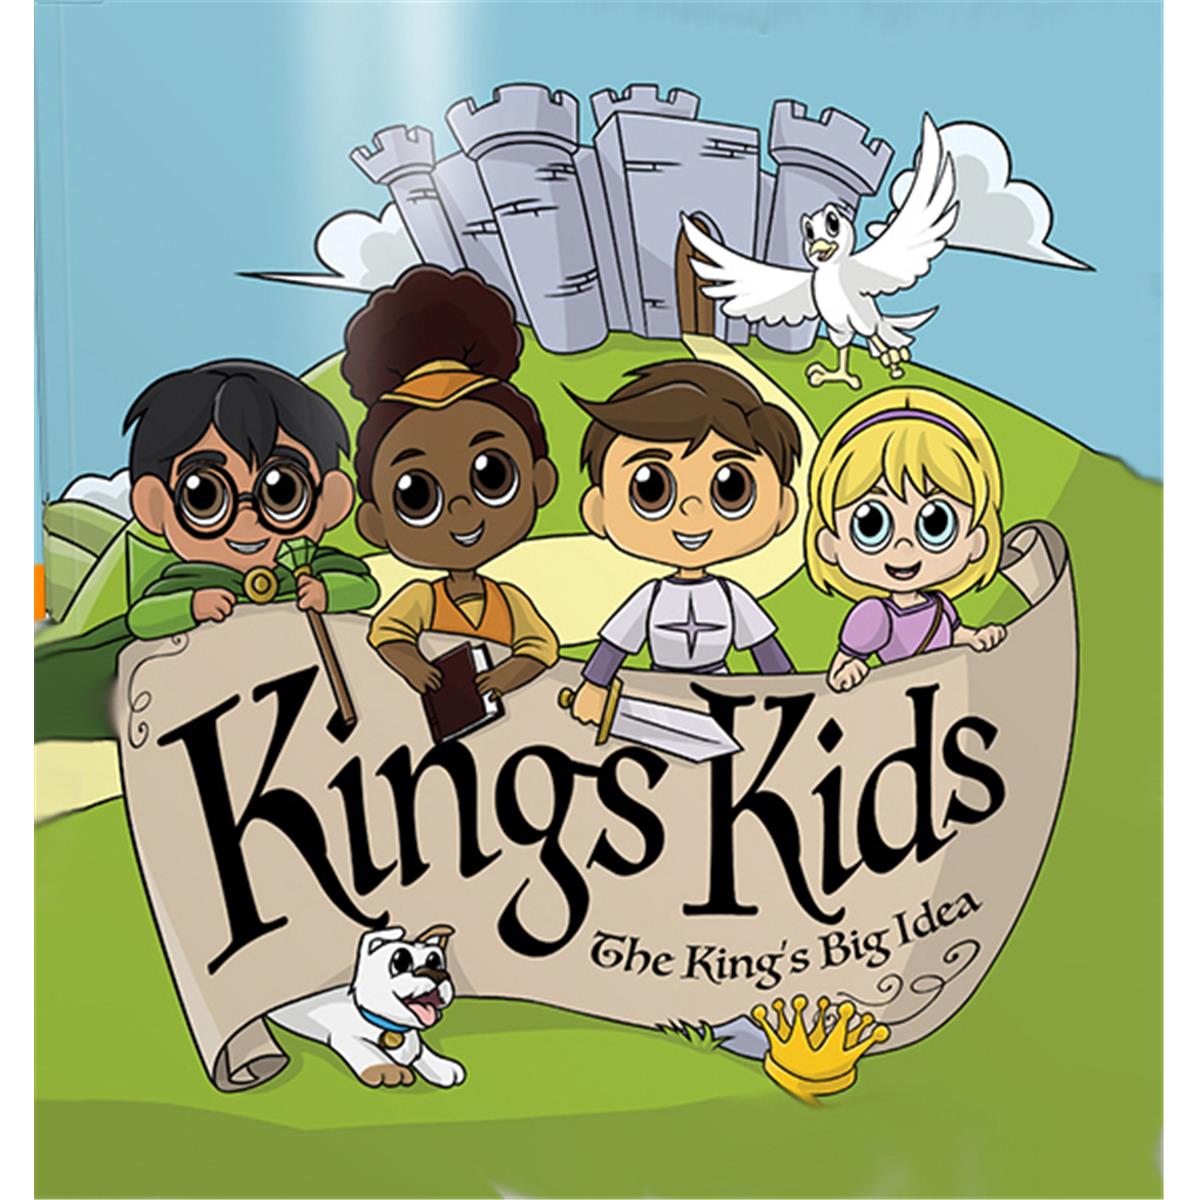 Kings Kids Books 139727 Kings Kids The Kings Big Idea - Ages 2-8 Years